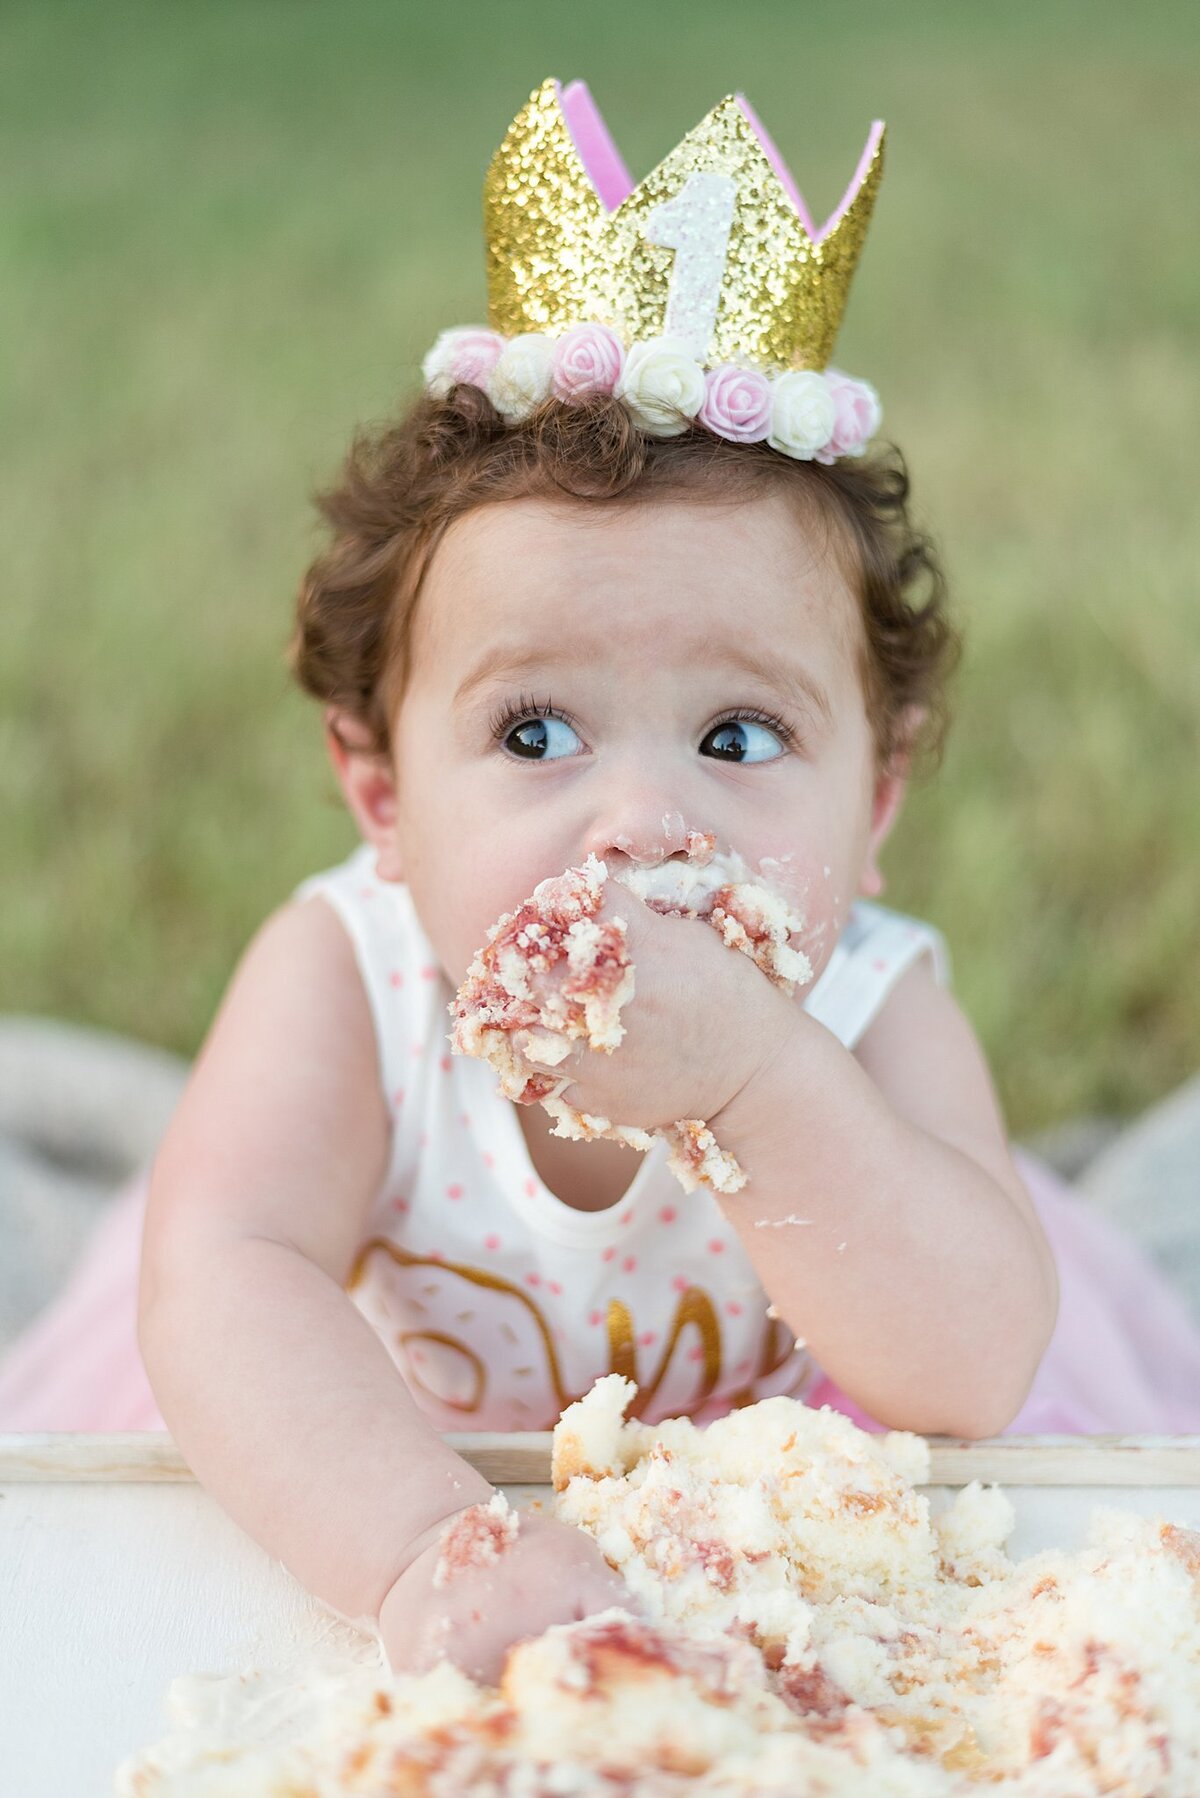 baby looking away eating cake